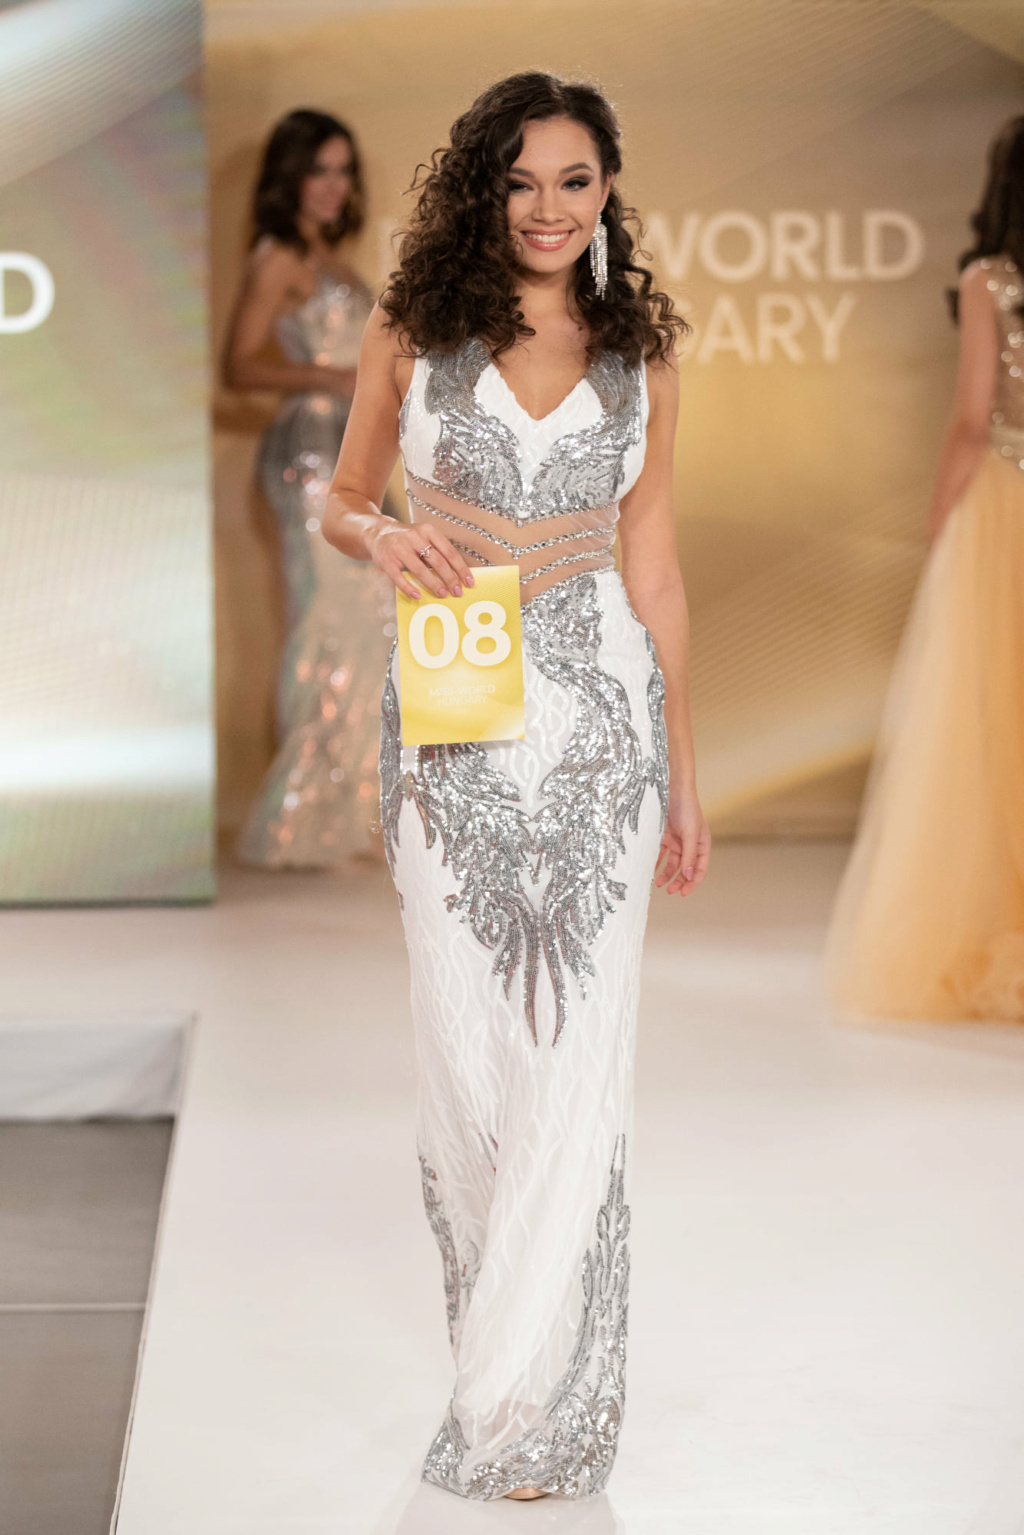 Miss World Hungary 2021 is Lili Tótpeti 25189310